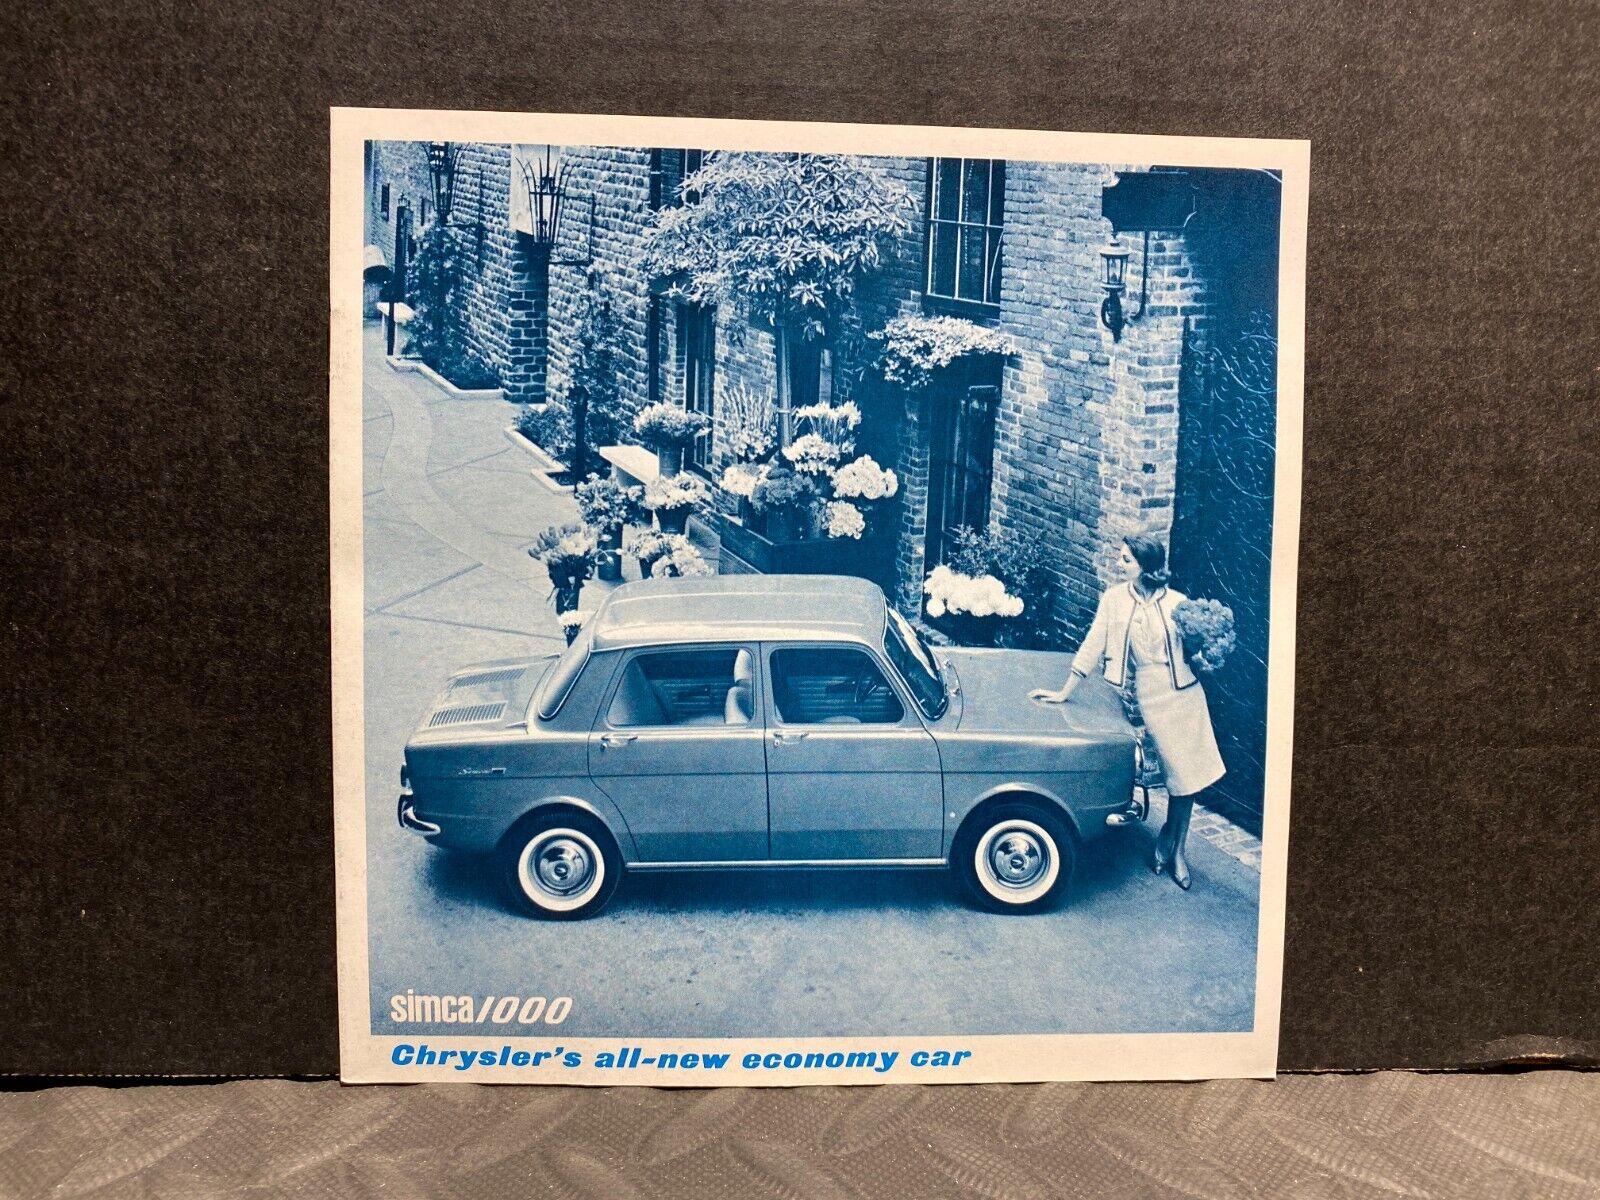 ORIGINAL NEW CAR DEALERSHIP BROCHURE VINTAGE 1965 SIMCA 1000